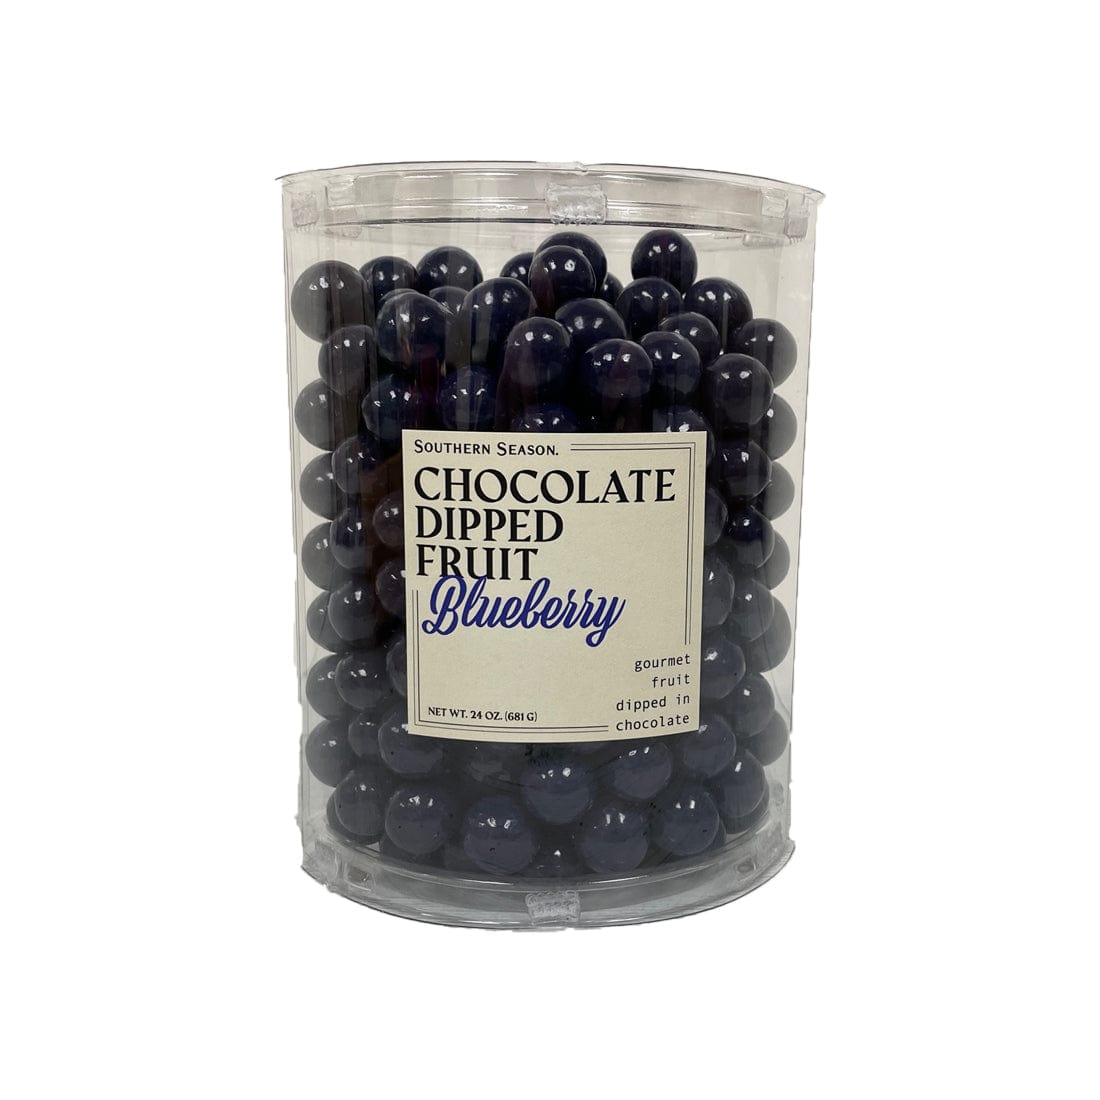 Southern Season Chocolate-Dipped Blueberries 24 oz